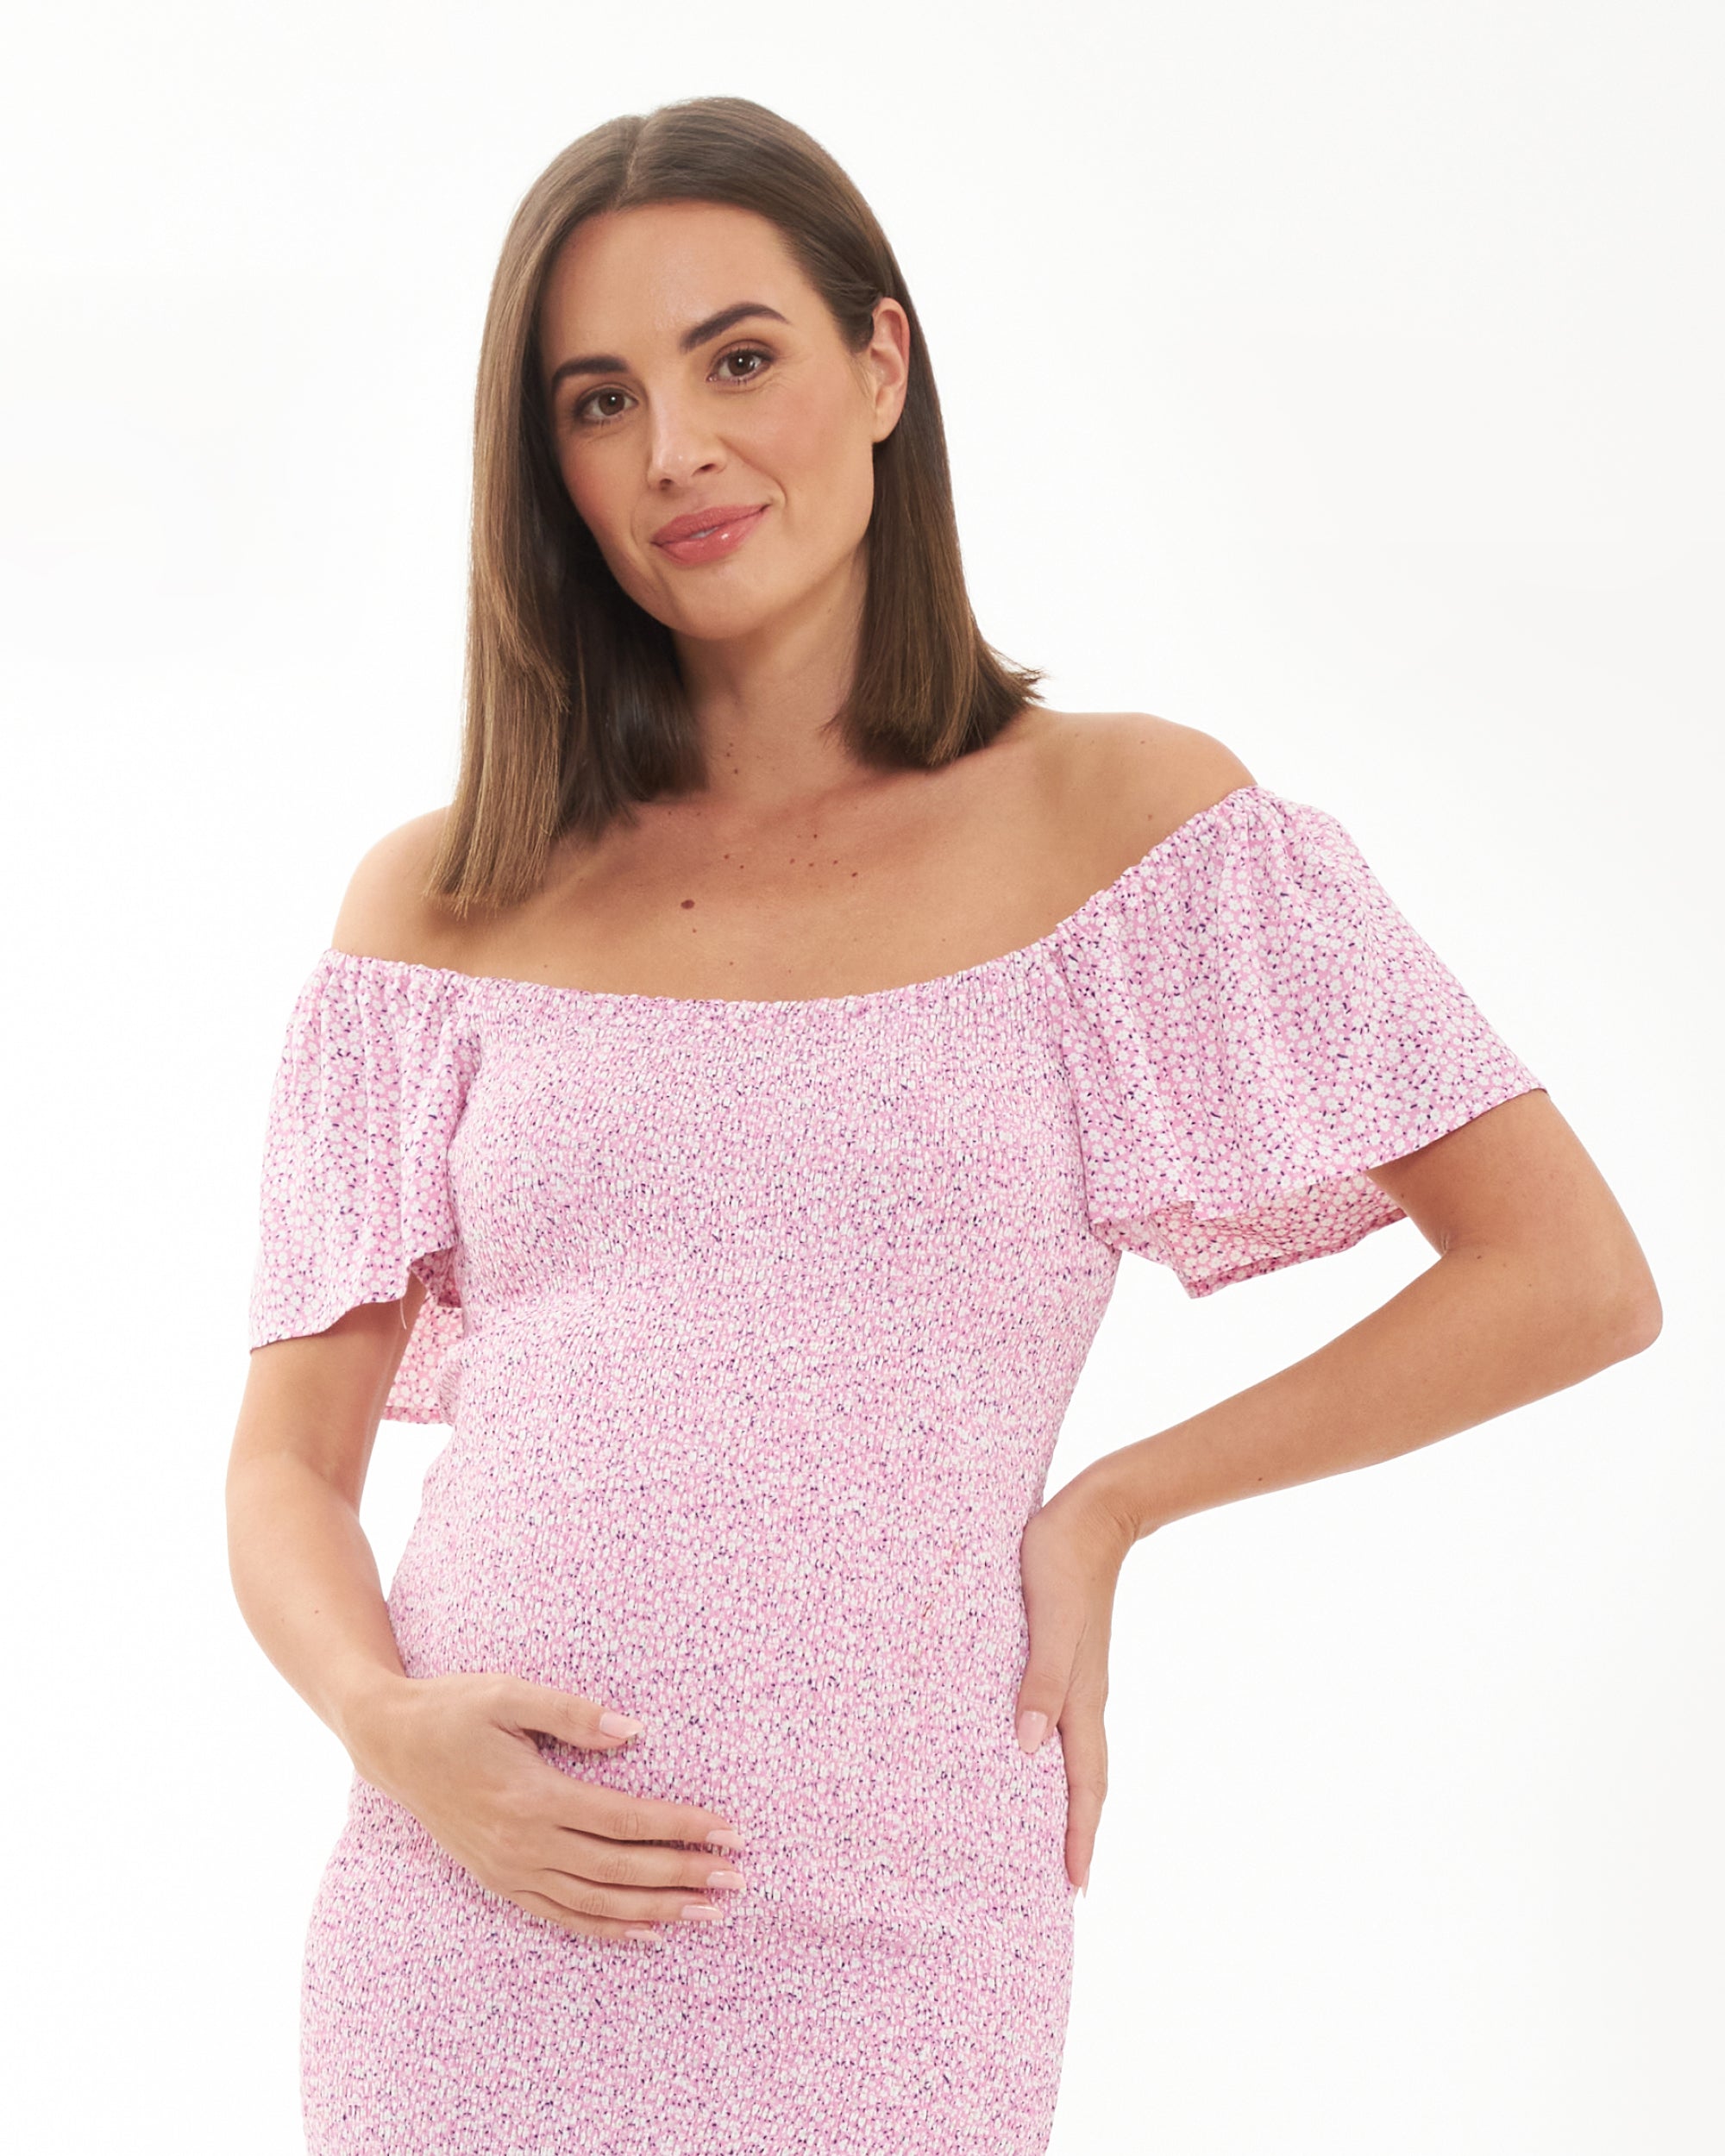 Maternity Dress for Women Midi Linen Dress for Baby Shower Postpartum Dress  Pregnancy Clothes Linen Mother's Day Gift LUCY Mint Green -  Denmark